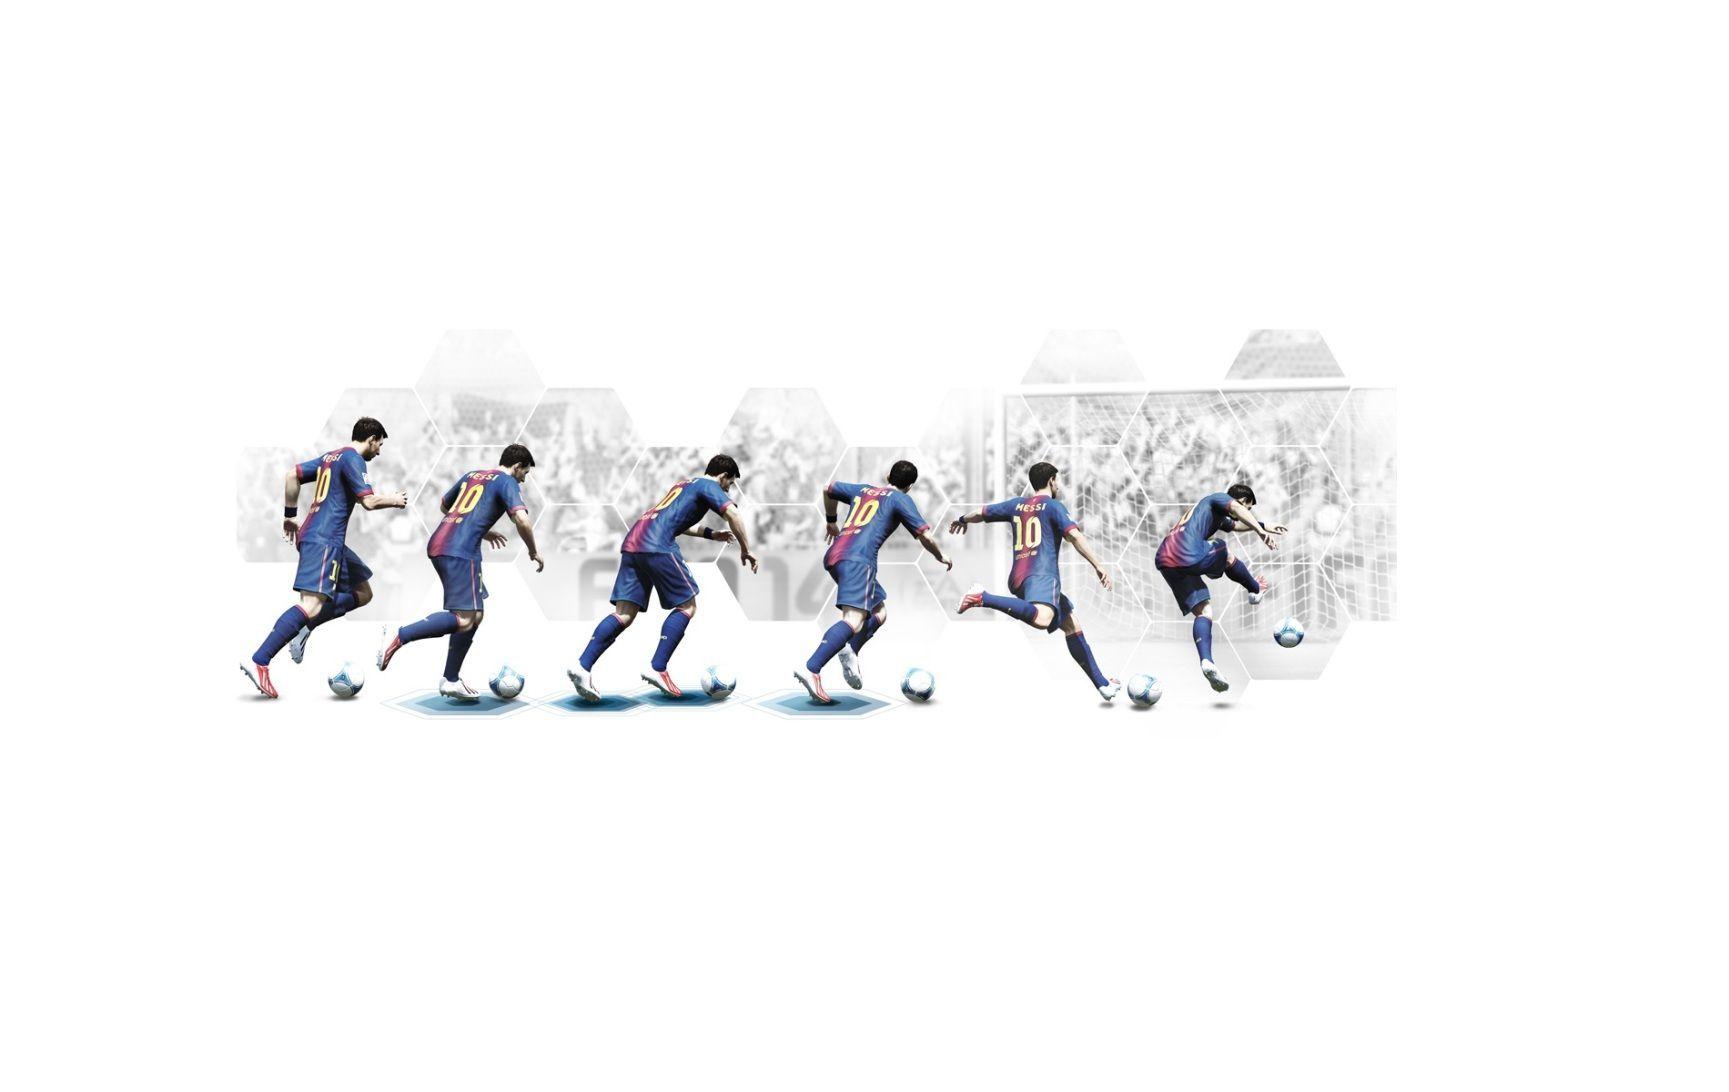 Messi FIFA 14 Wallpaper. Free Download Wallpaper